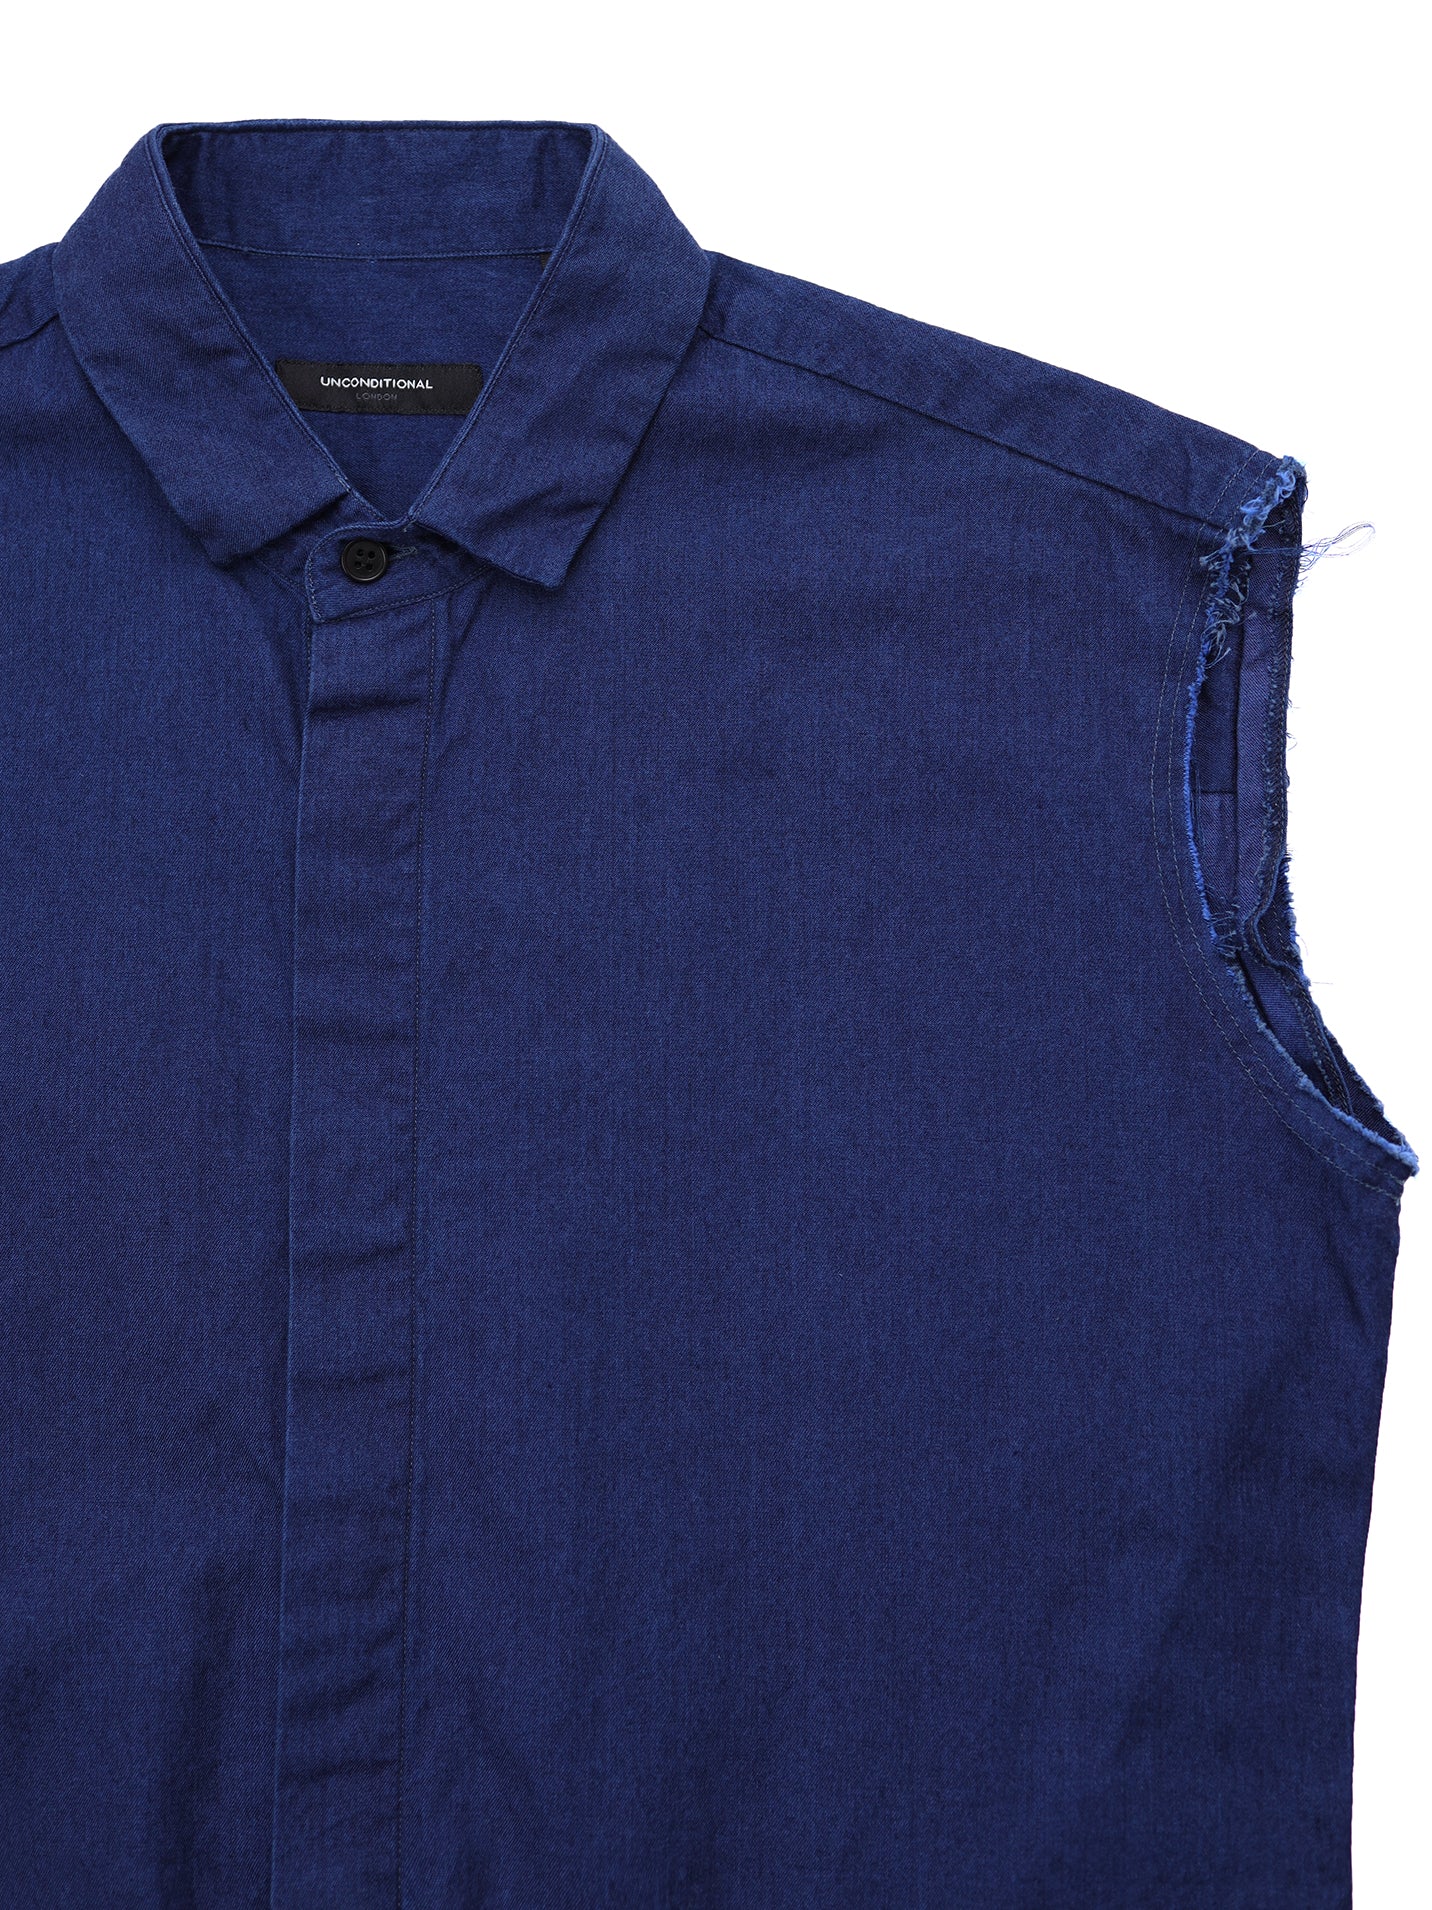 Navy Blue Sleeveless Shirt